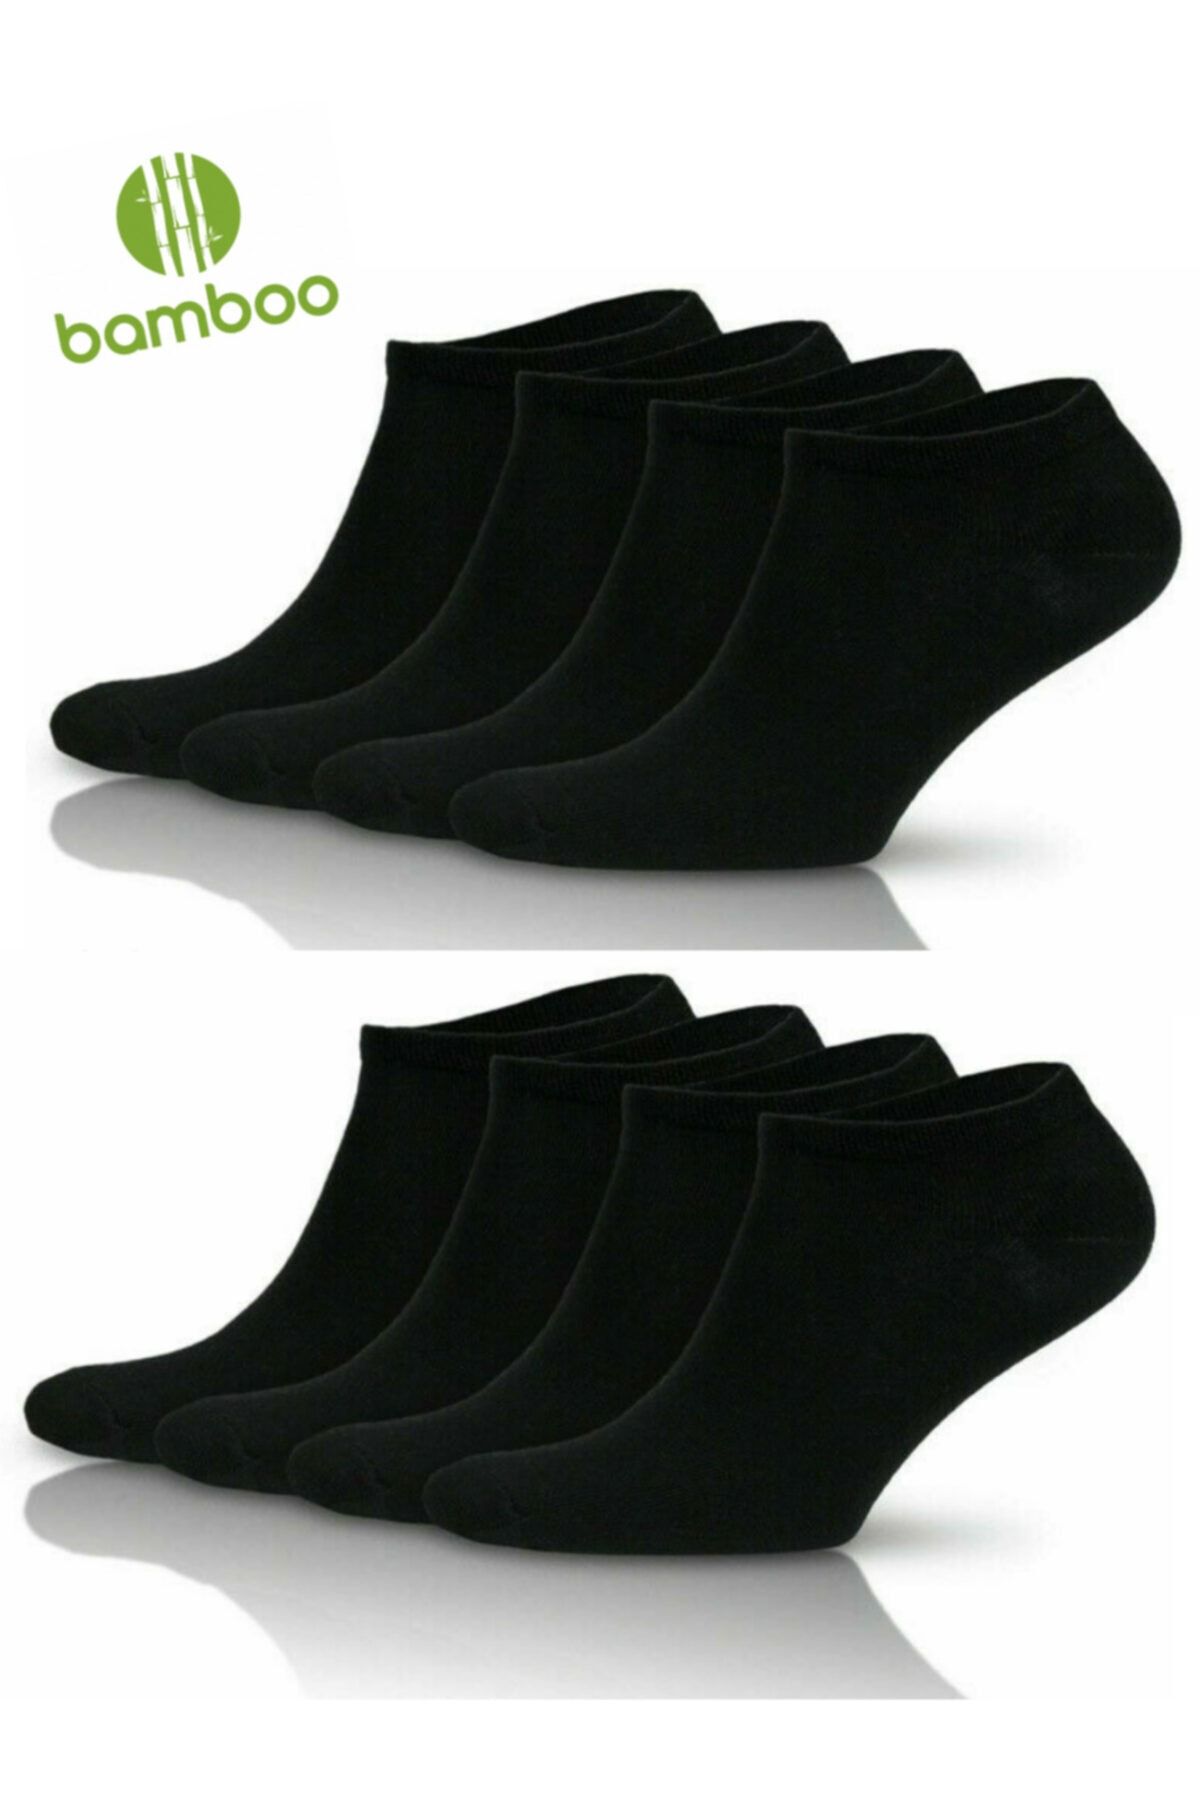 socksbox 8 Li Paket Bambu Dikişsiz Siyah Patik Çorap / Unisex